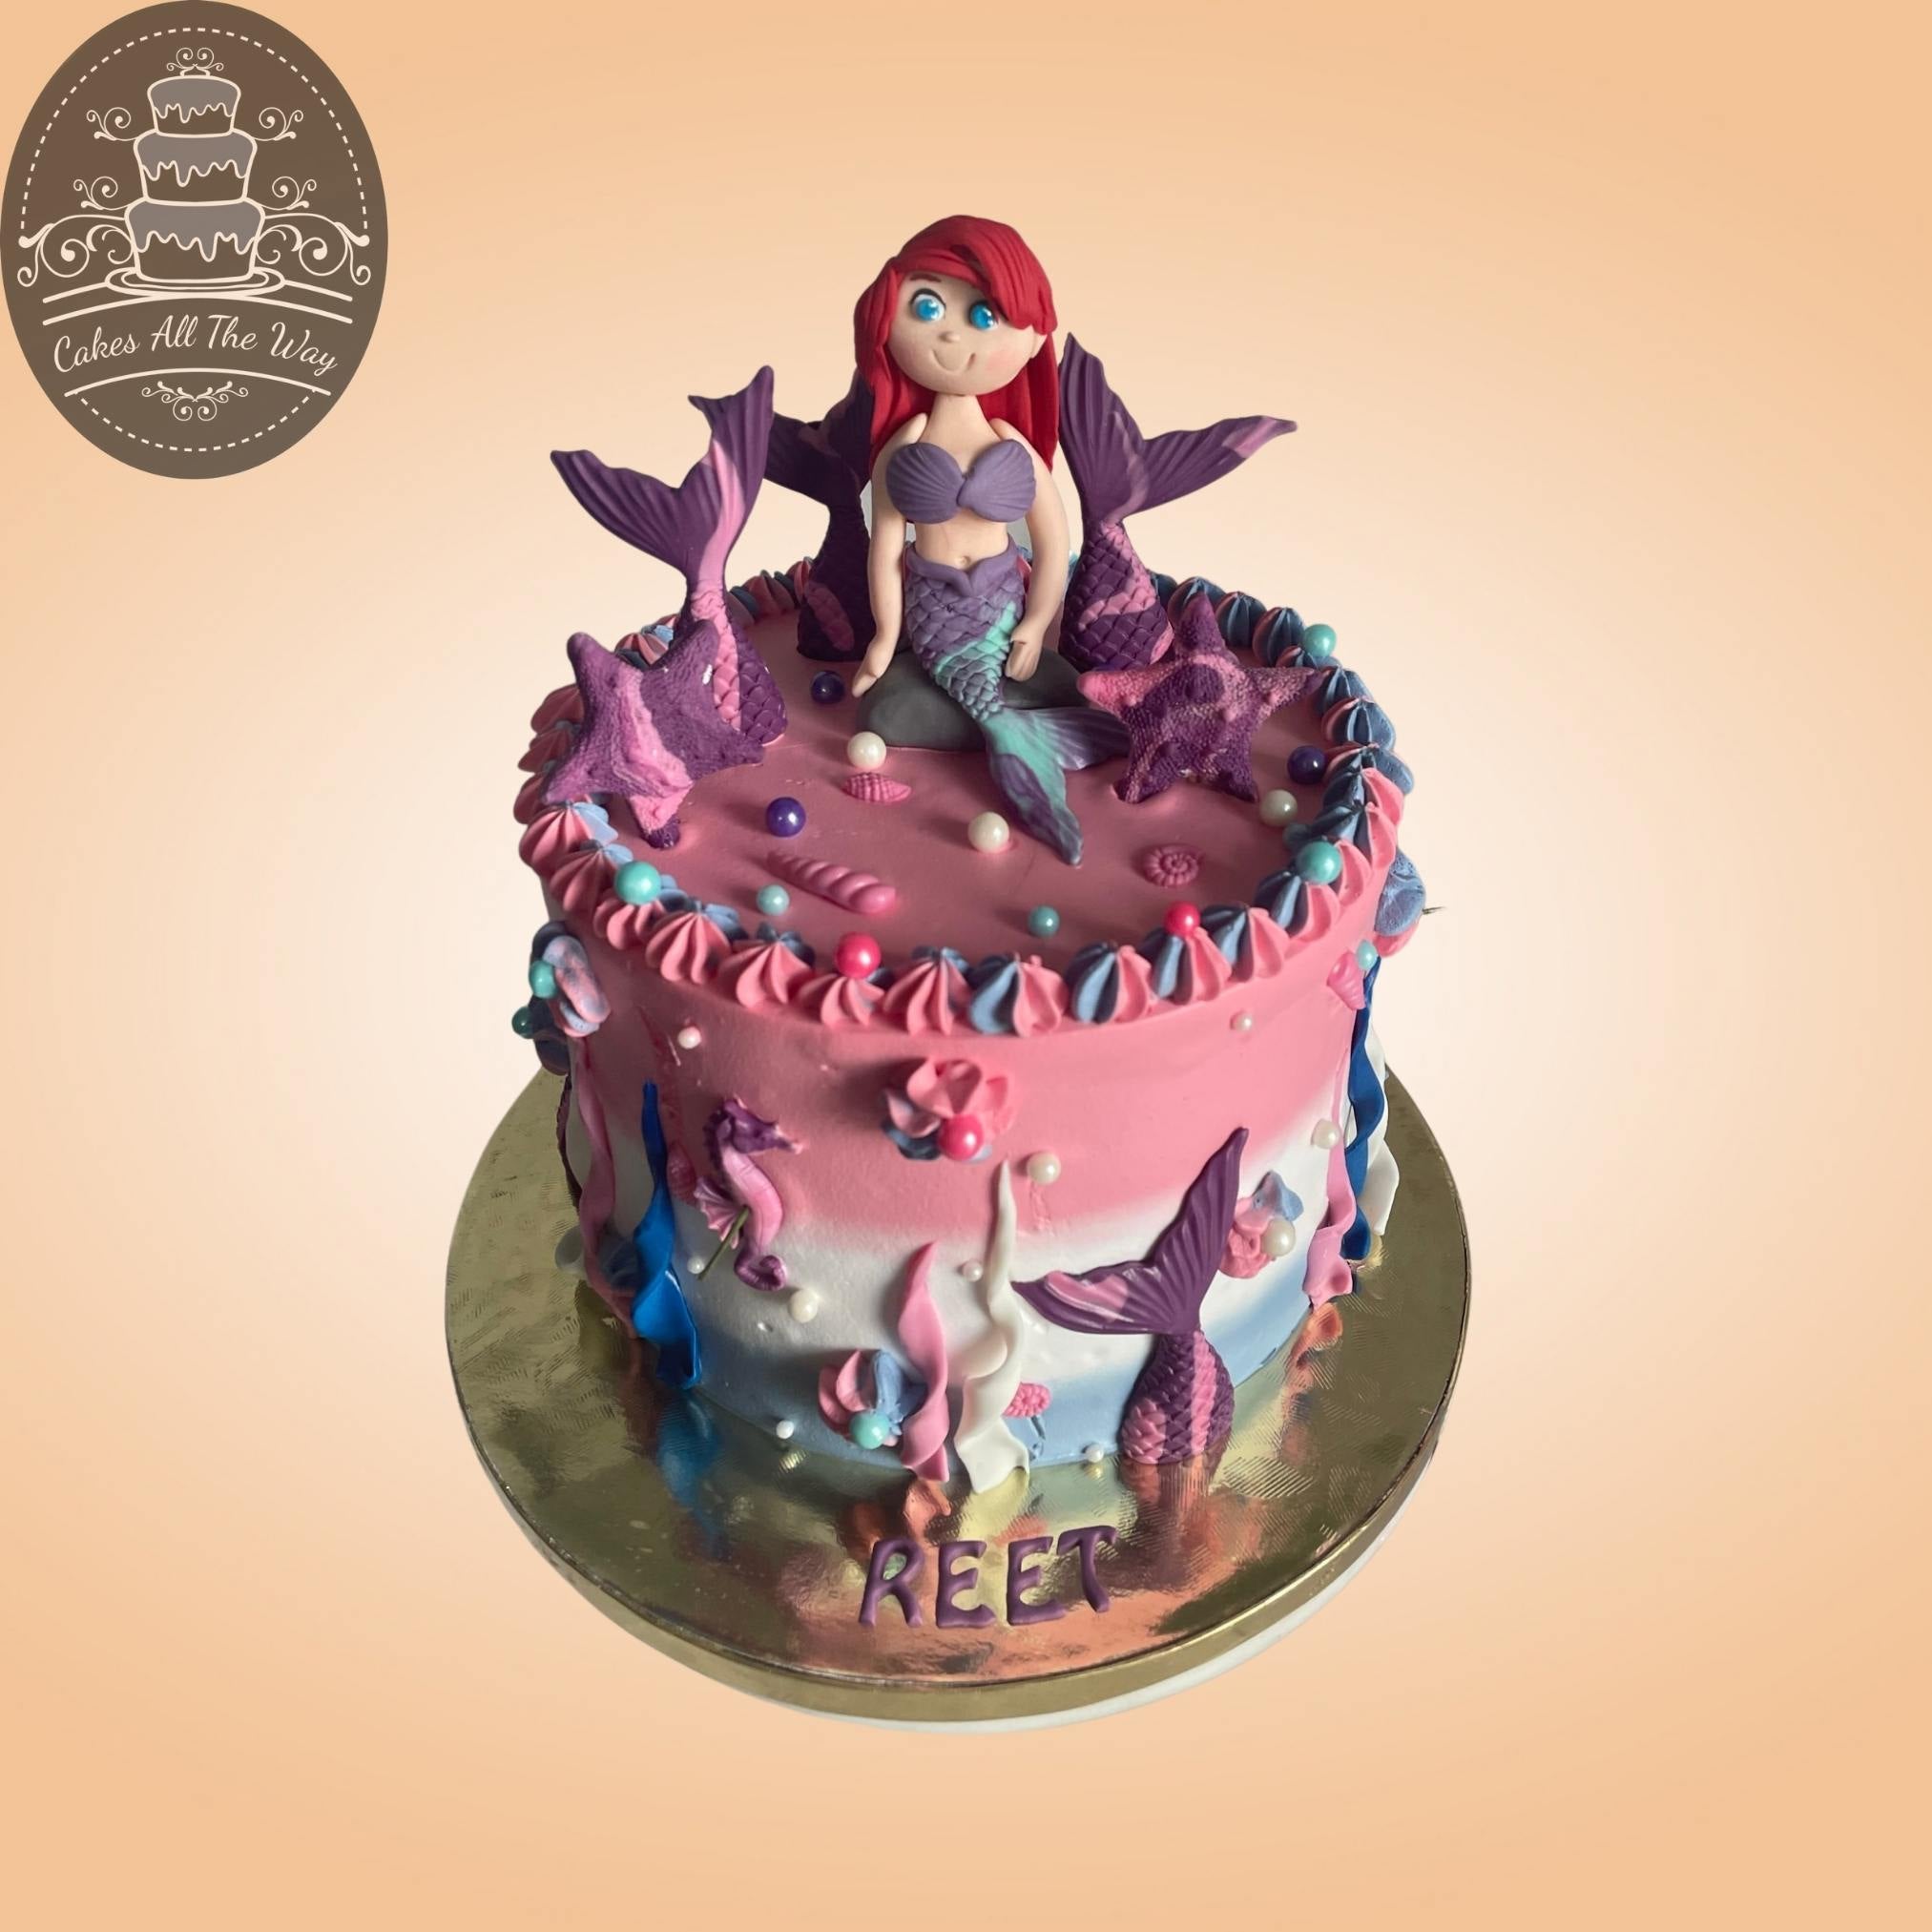 Mermaid Cake — Let's Get Baked in Forster